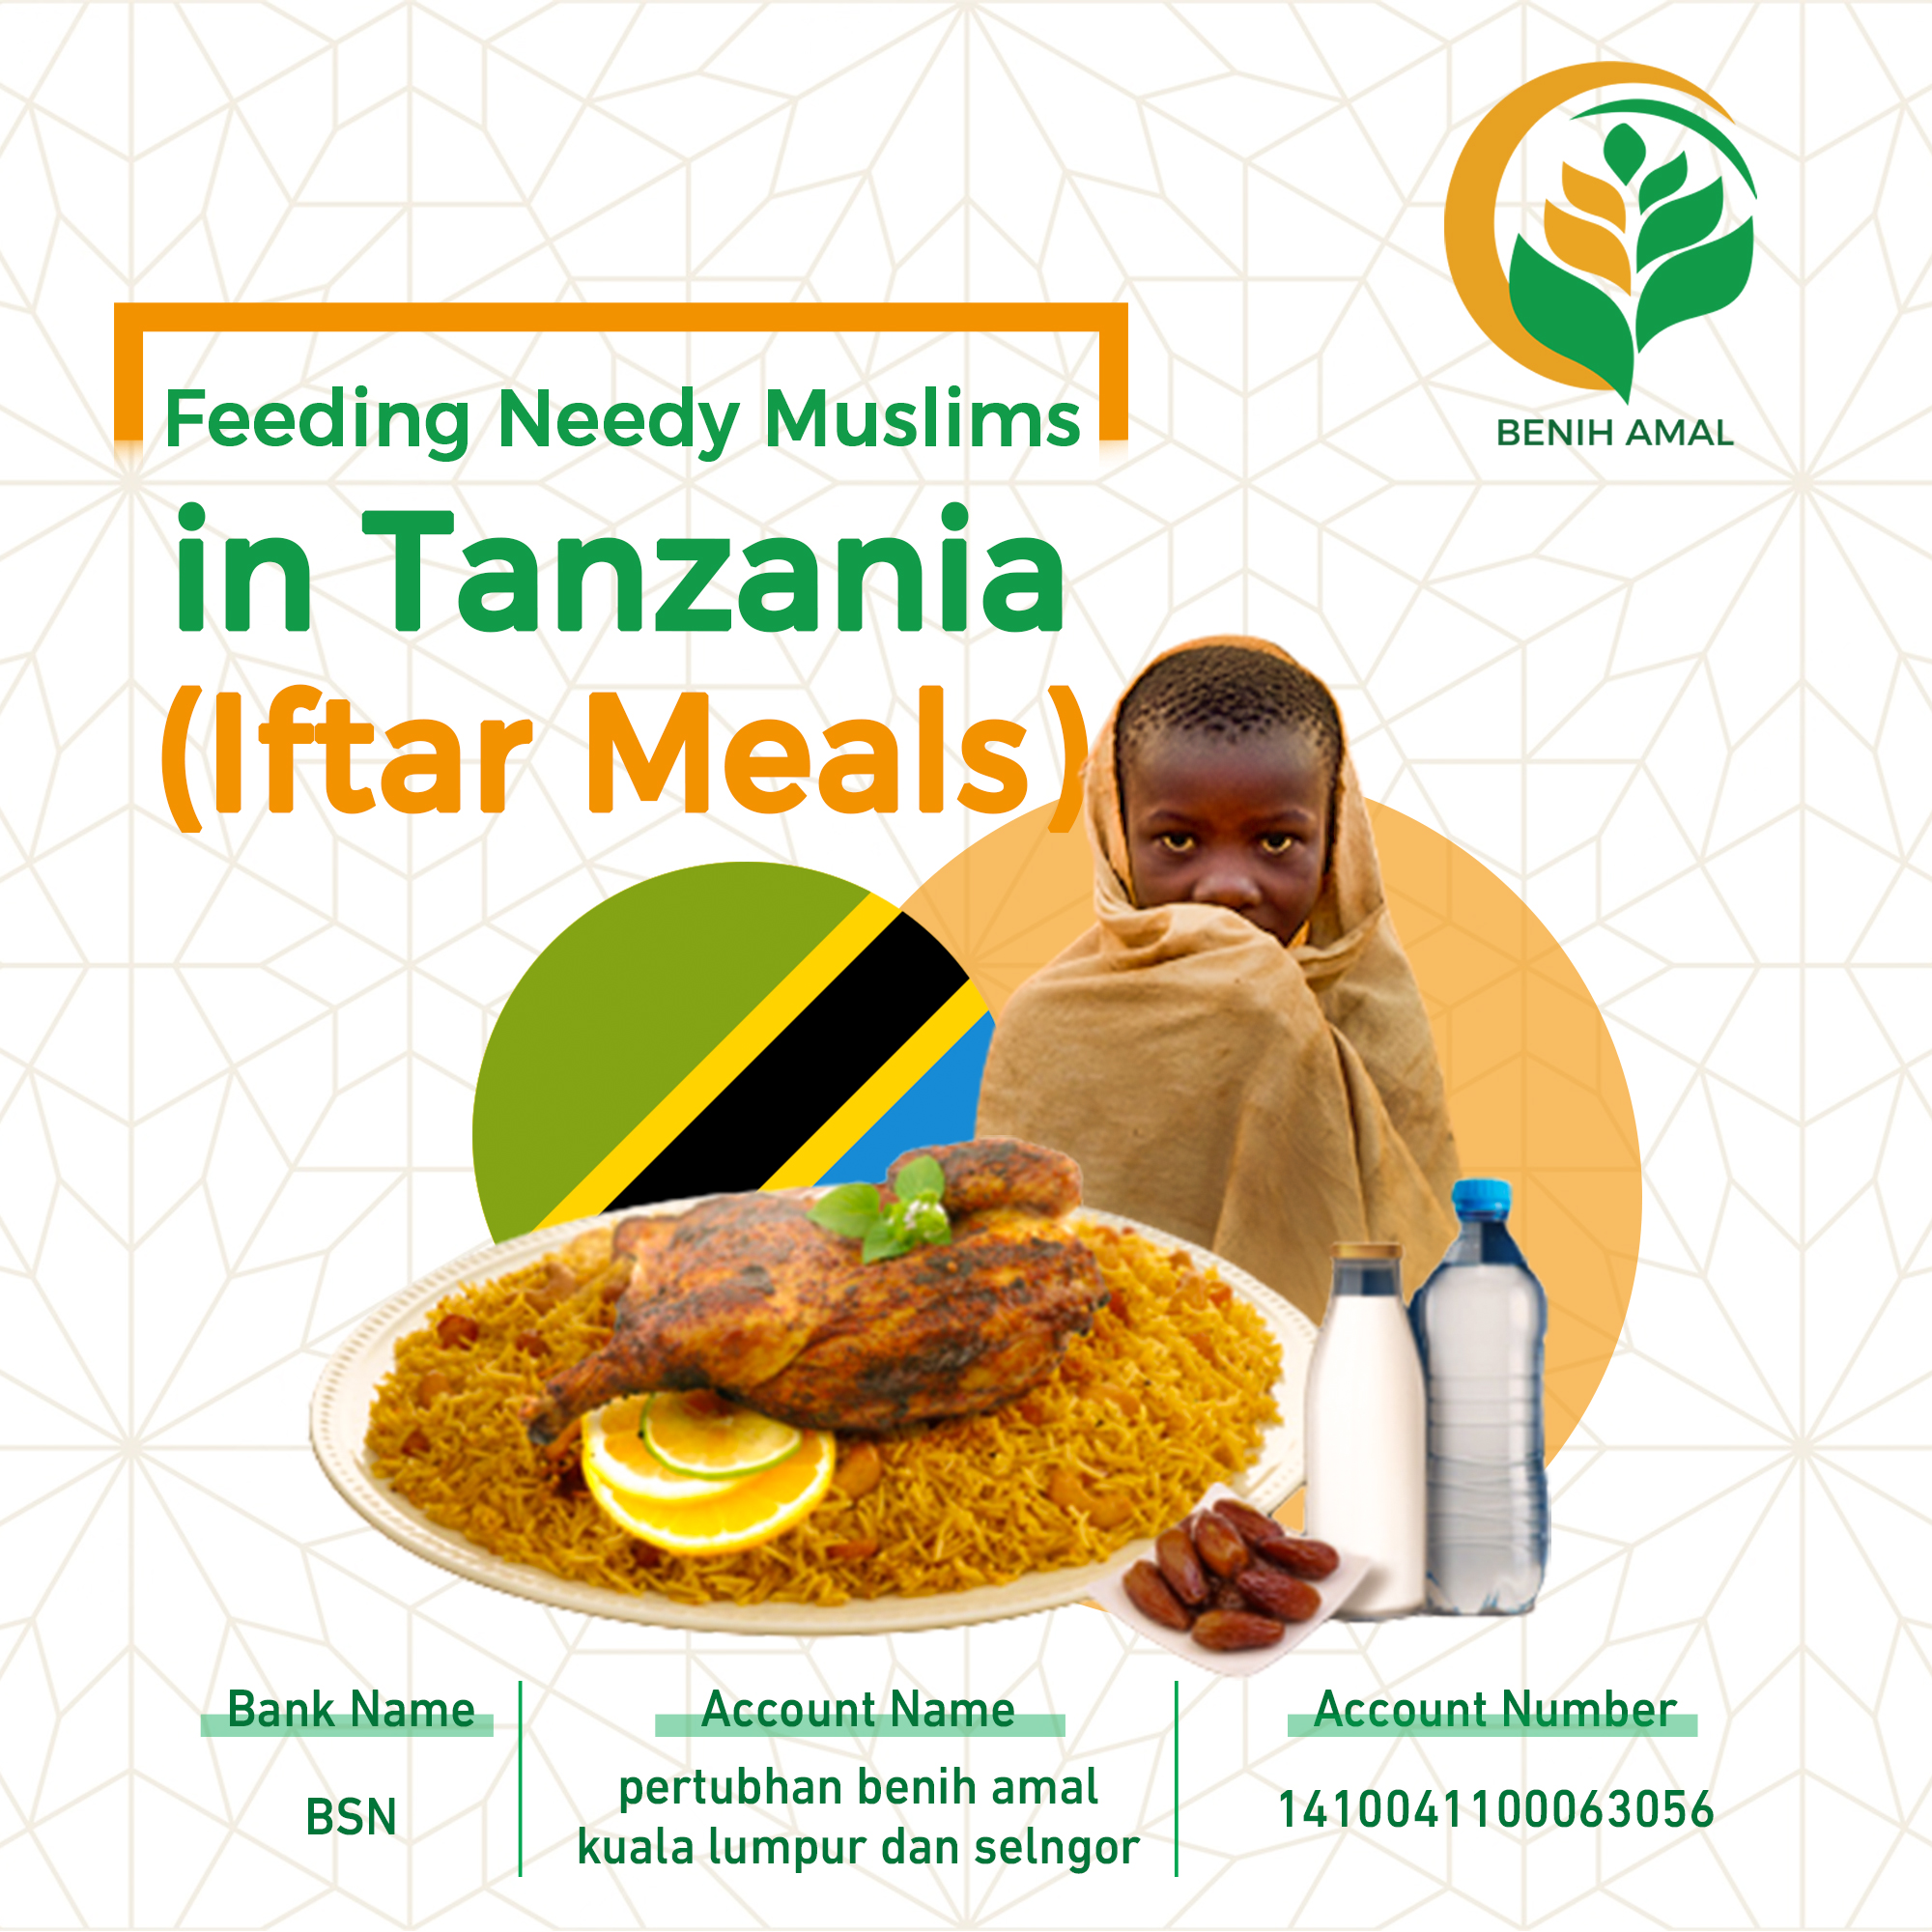 Feeding Needy Muslims in Tanzania (Iftar Meals)